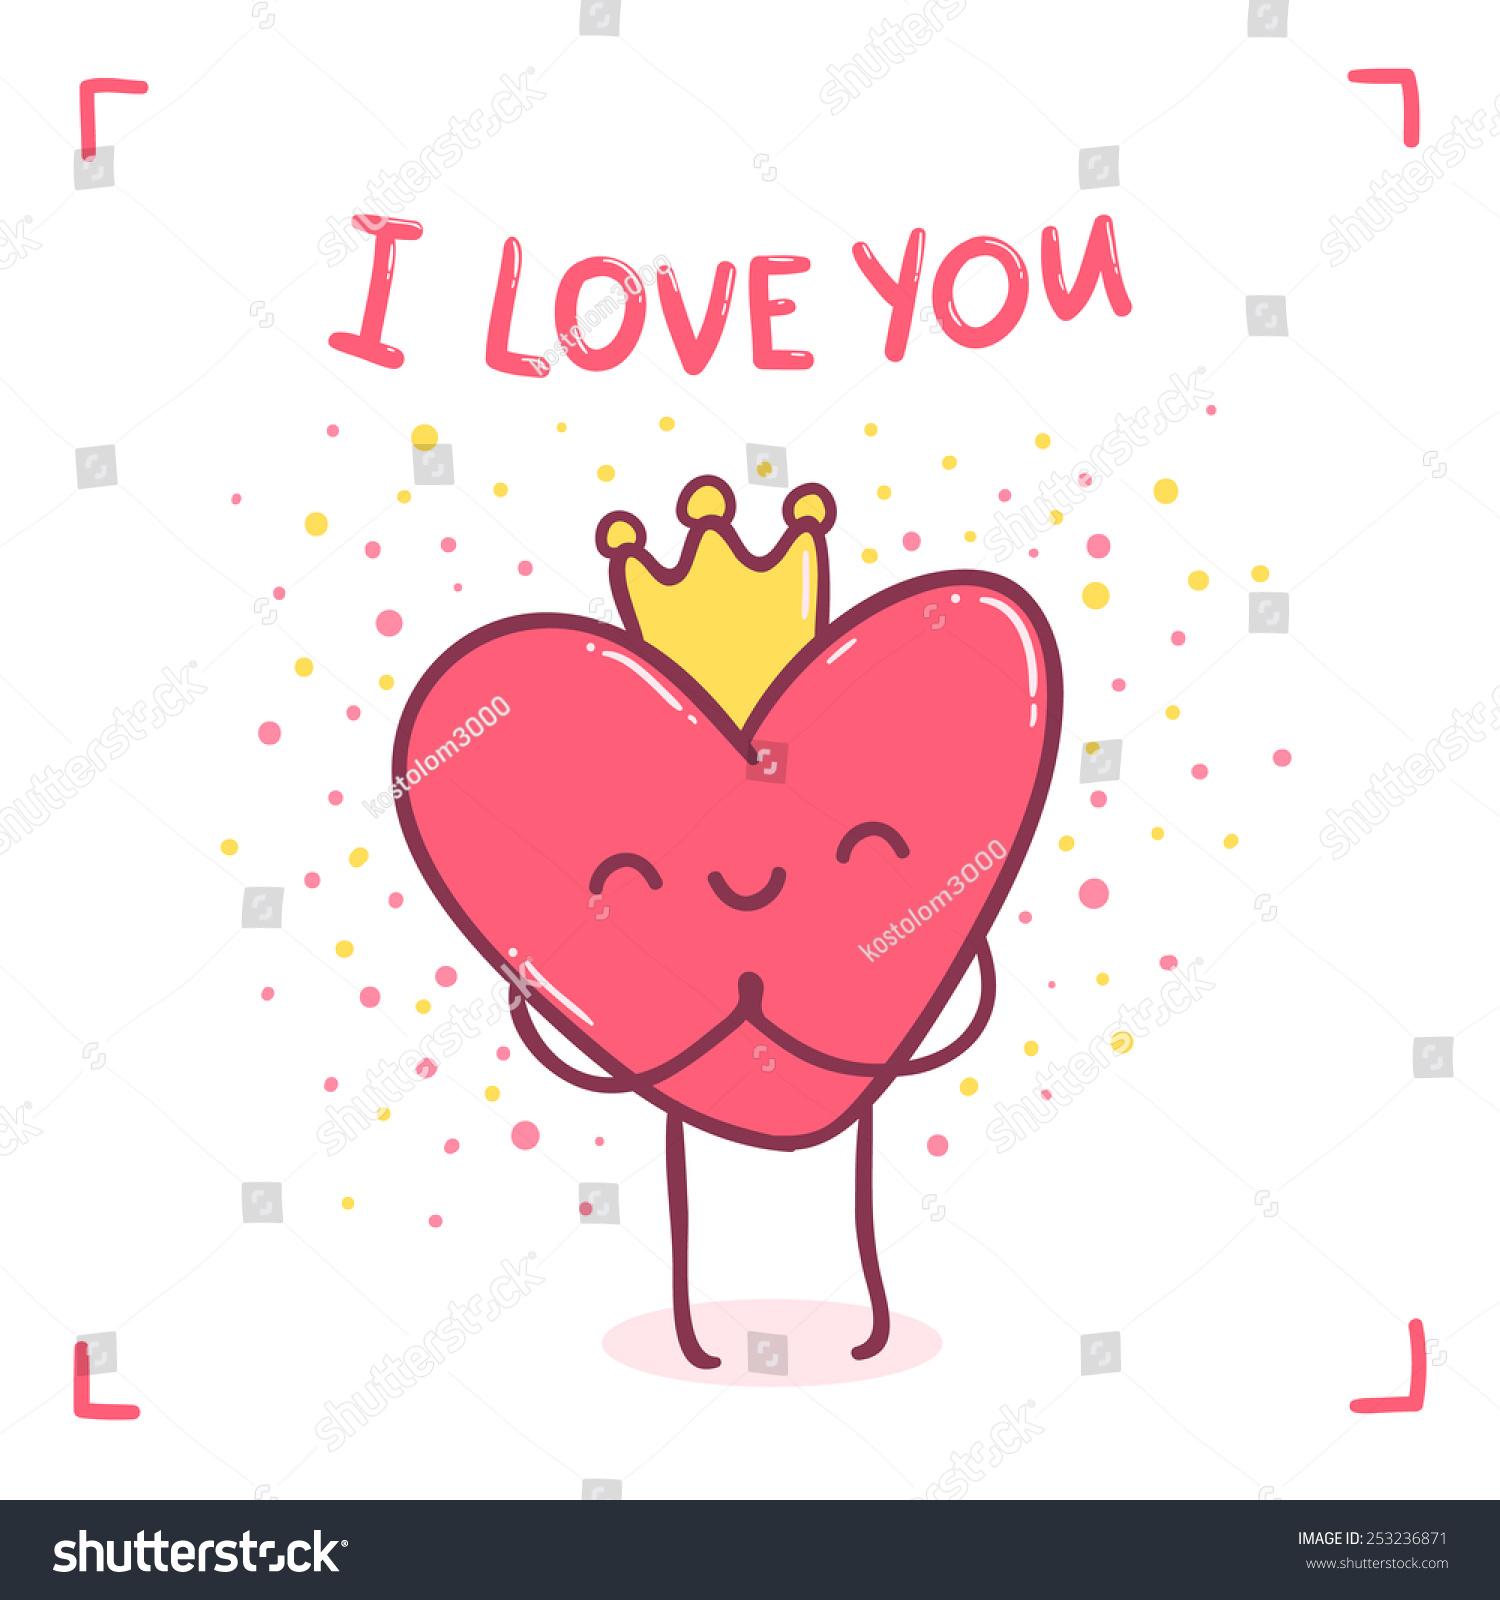 Cute Cartoon Heart Character Love You Stock Vector 253236871 - Shutterstock